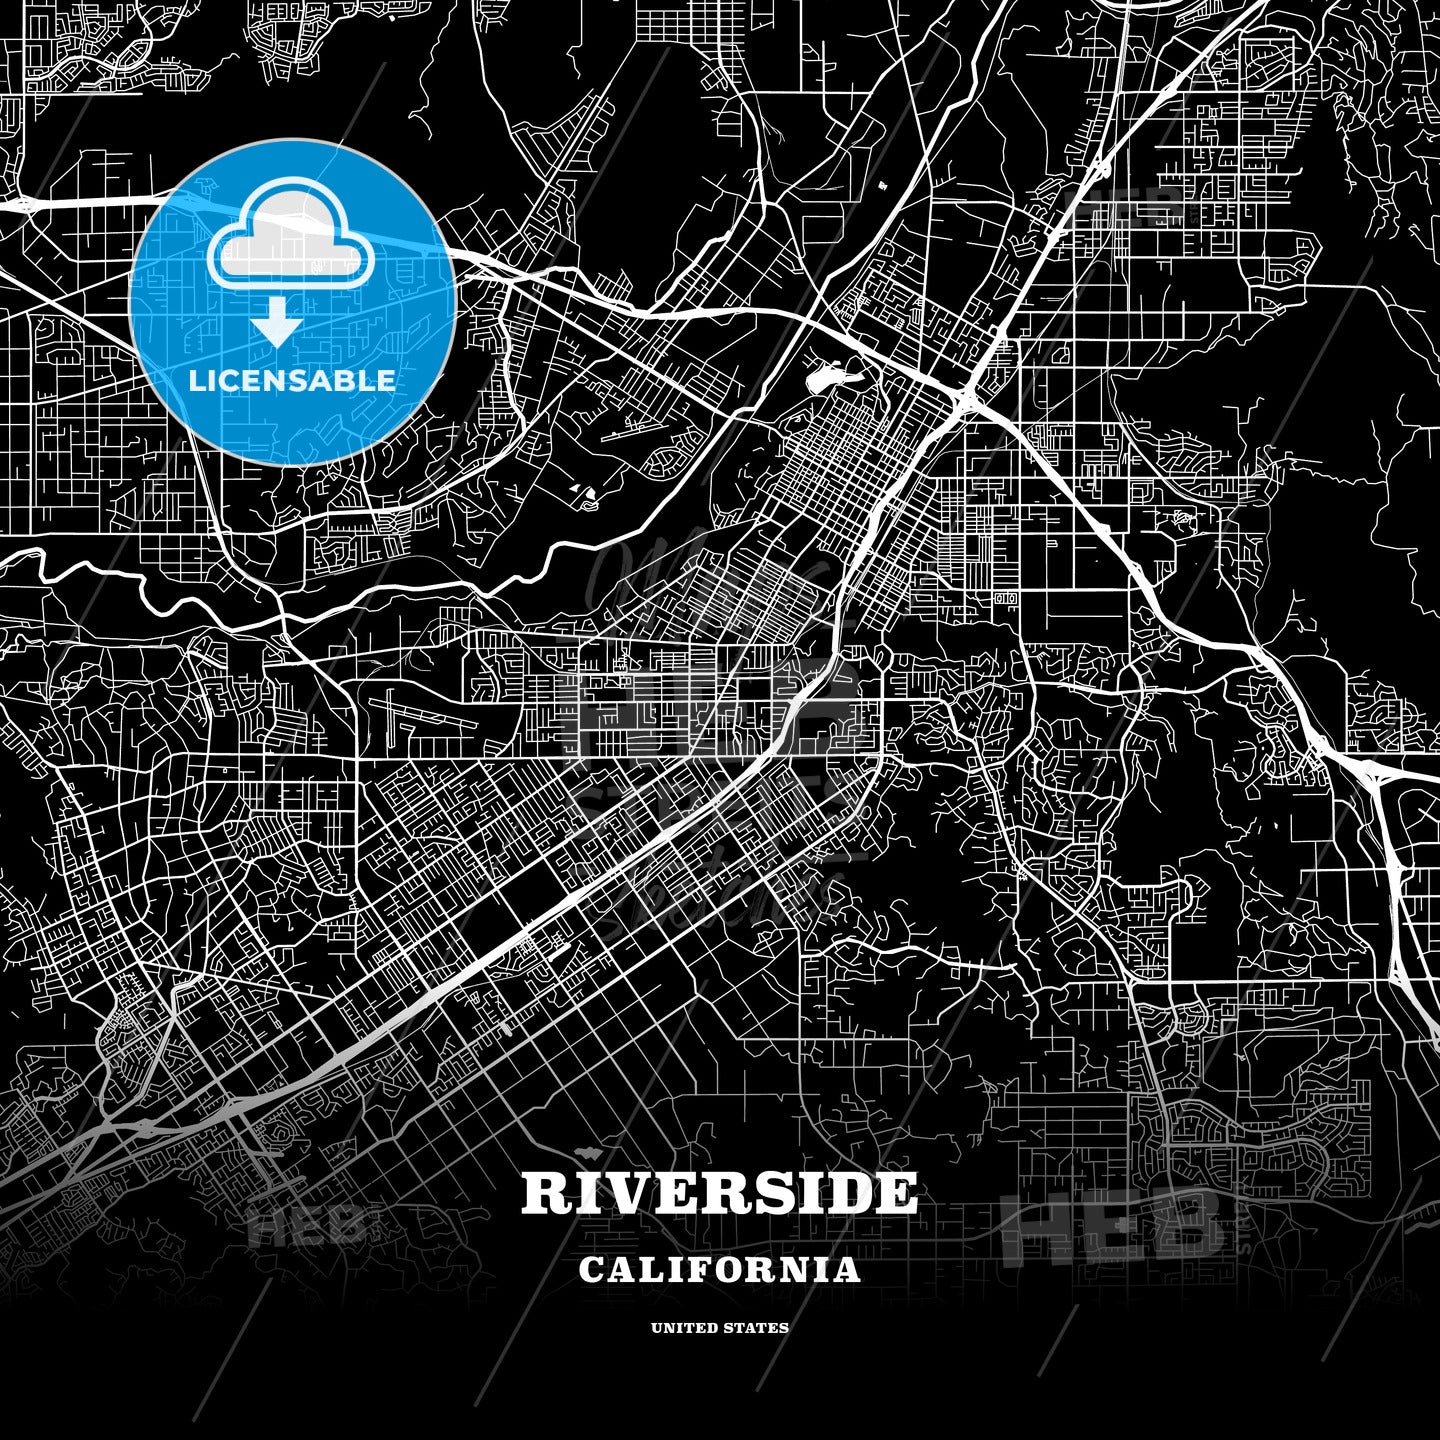 Riverside, California, USA map